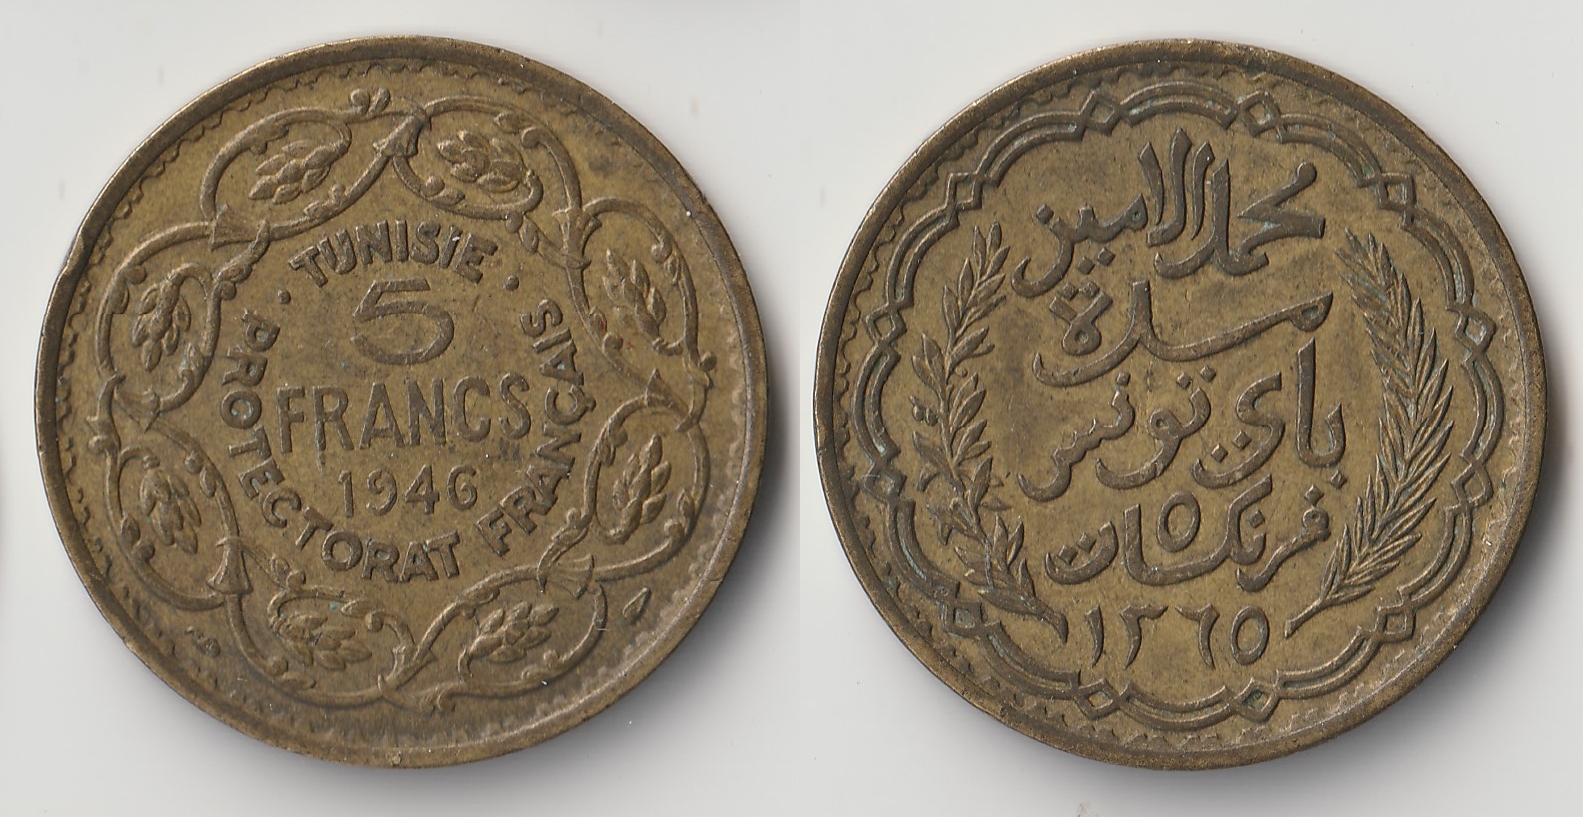 1946 tunisia 5 francs.jpg